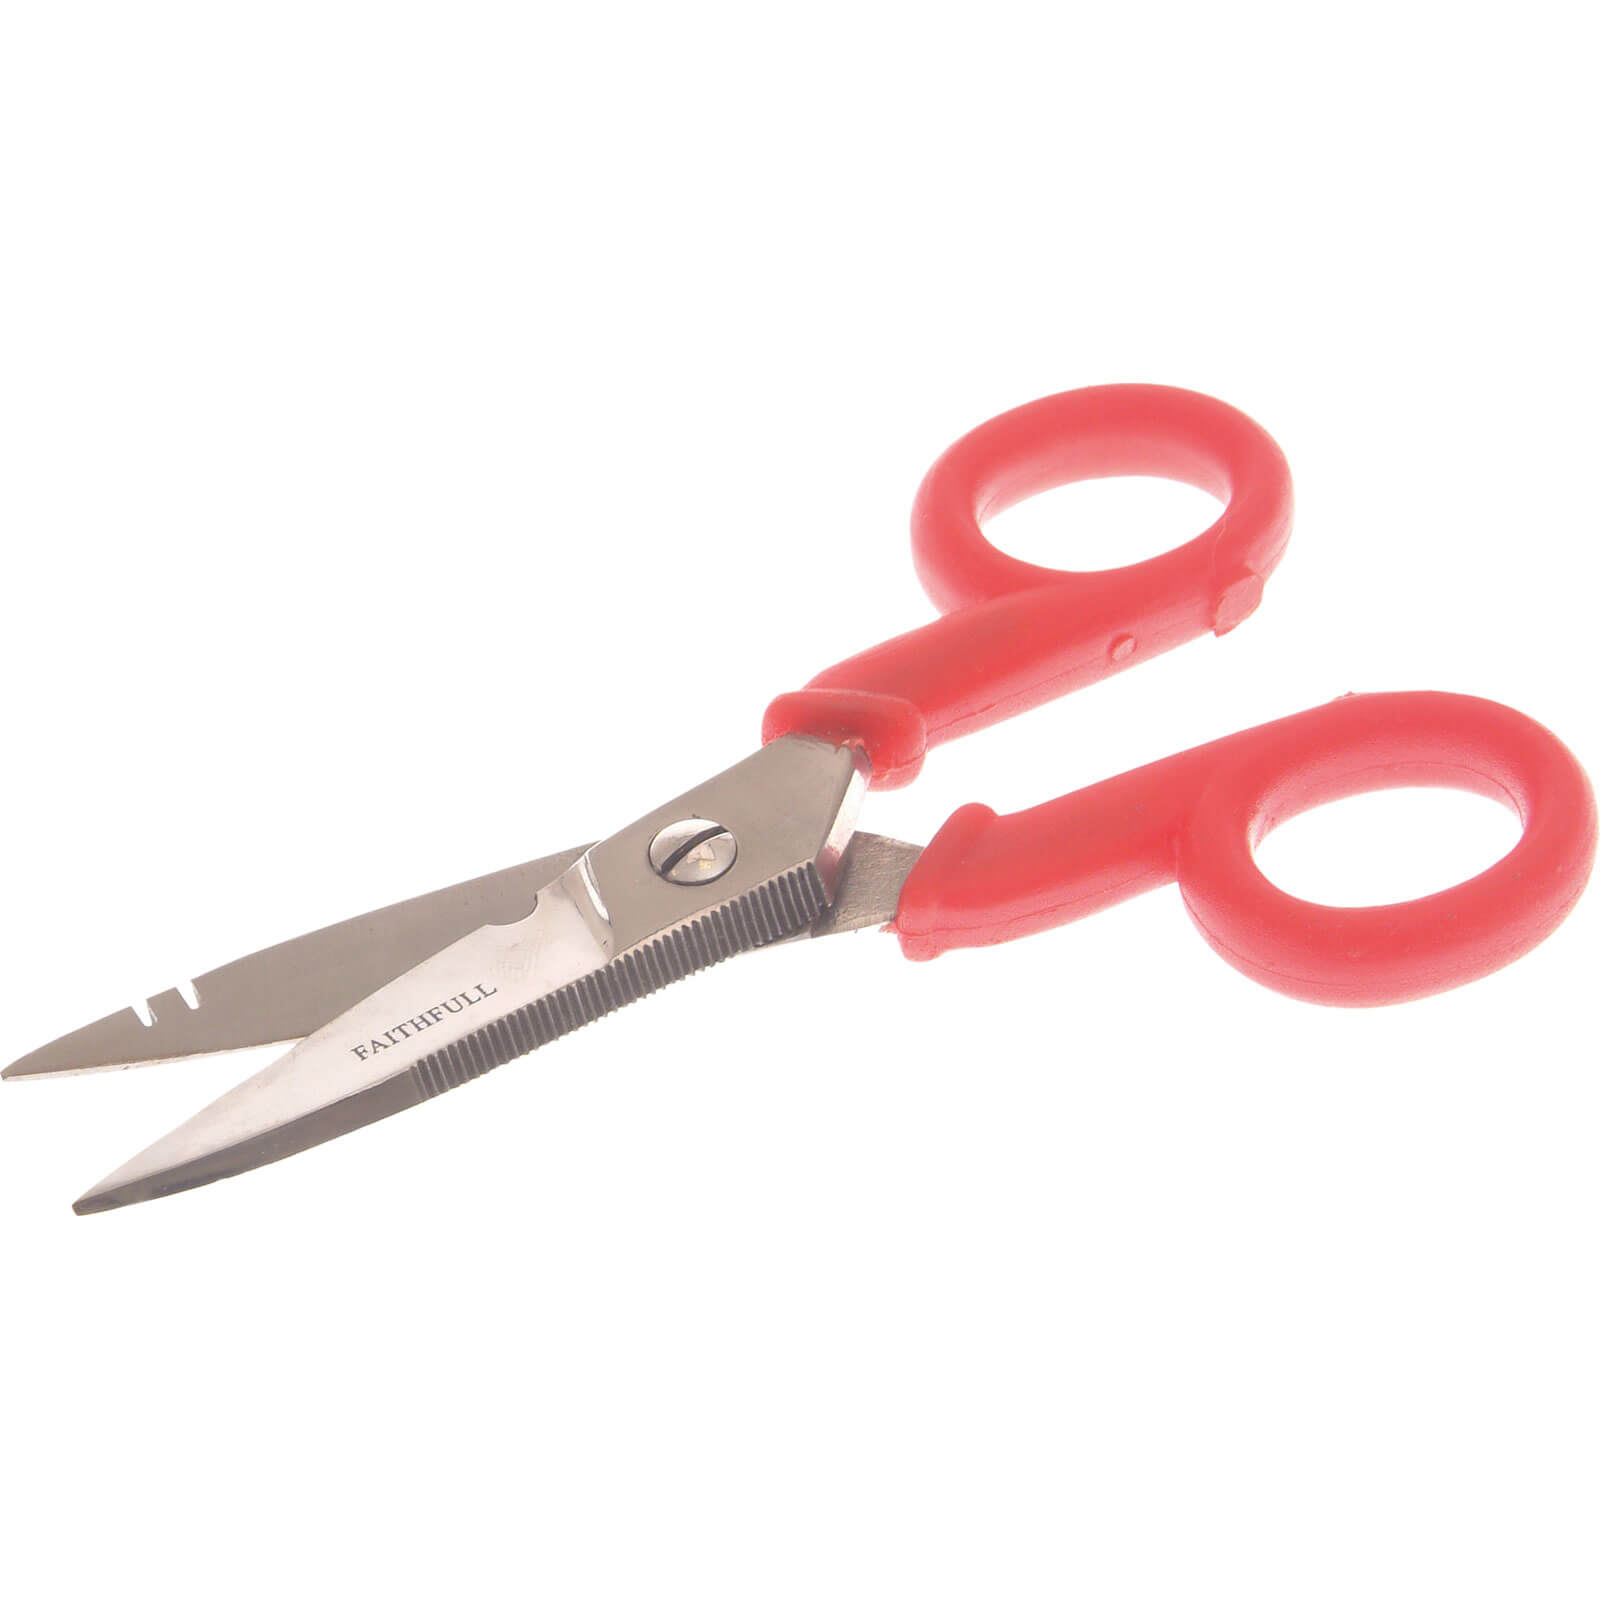 Image of Faithfull Electricians Scissors